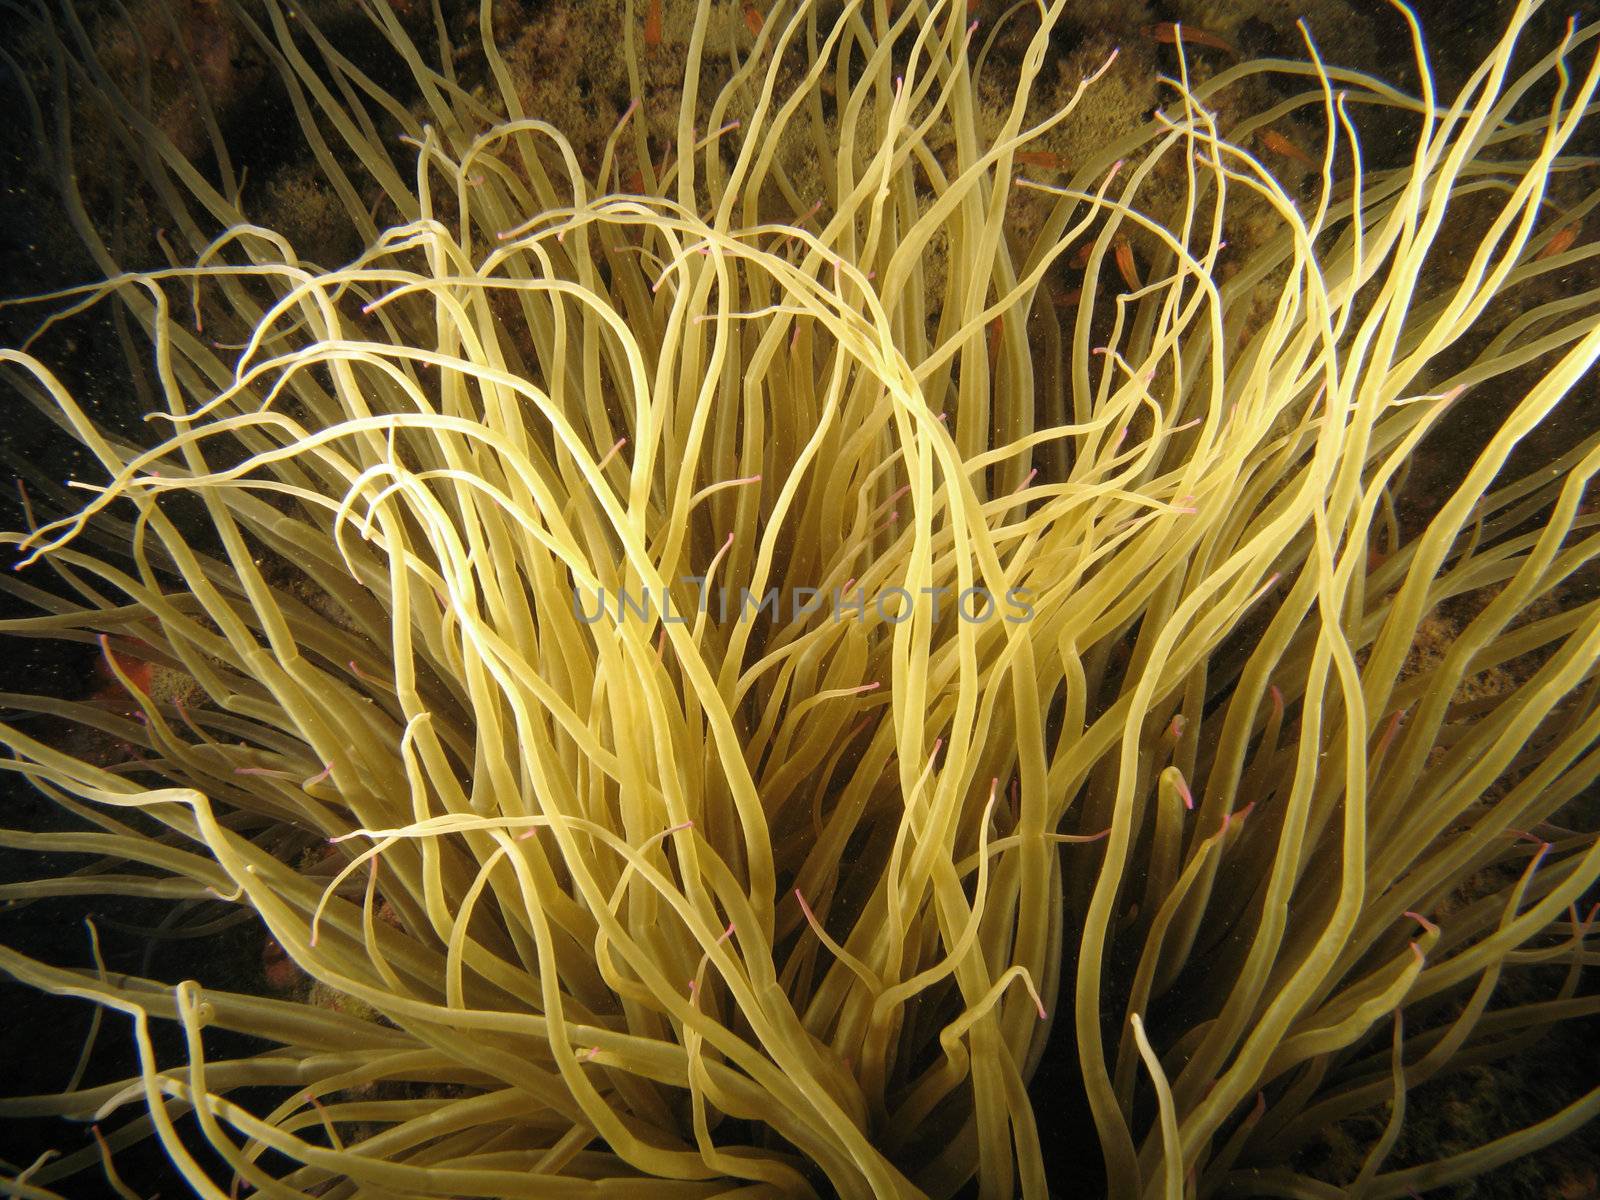 Sea anemone by PlanctonVideo